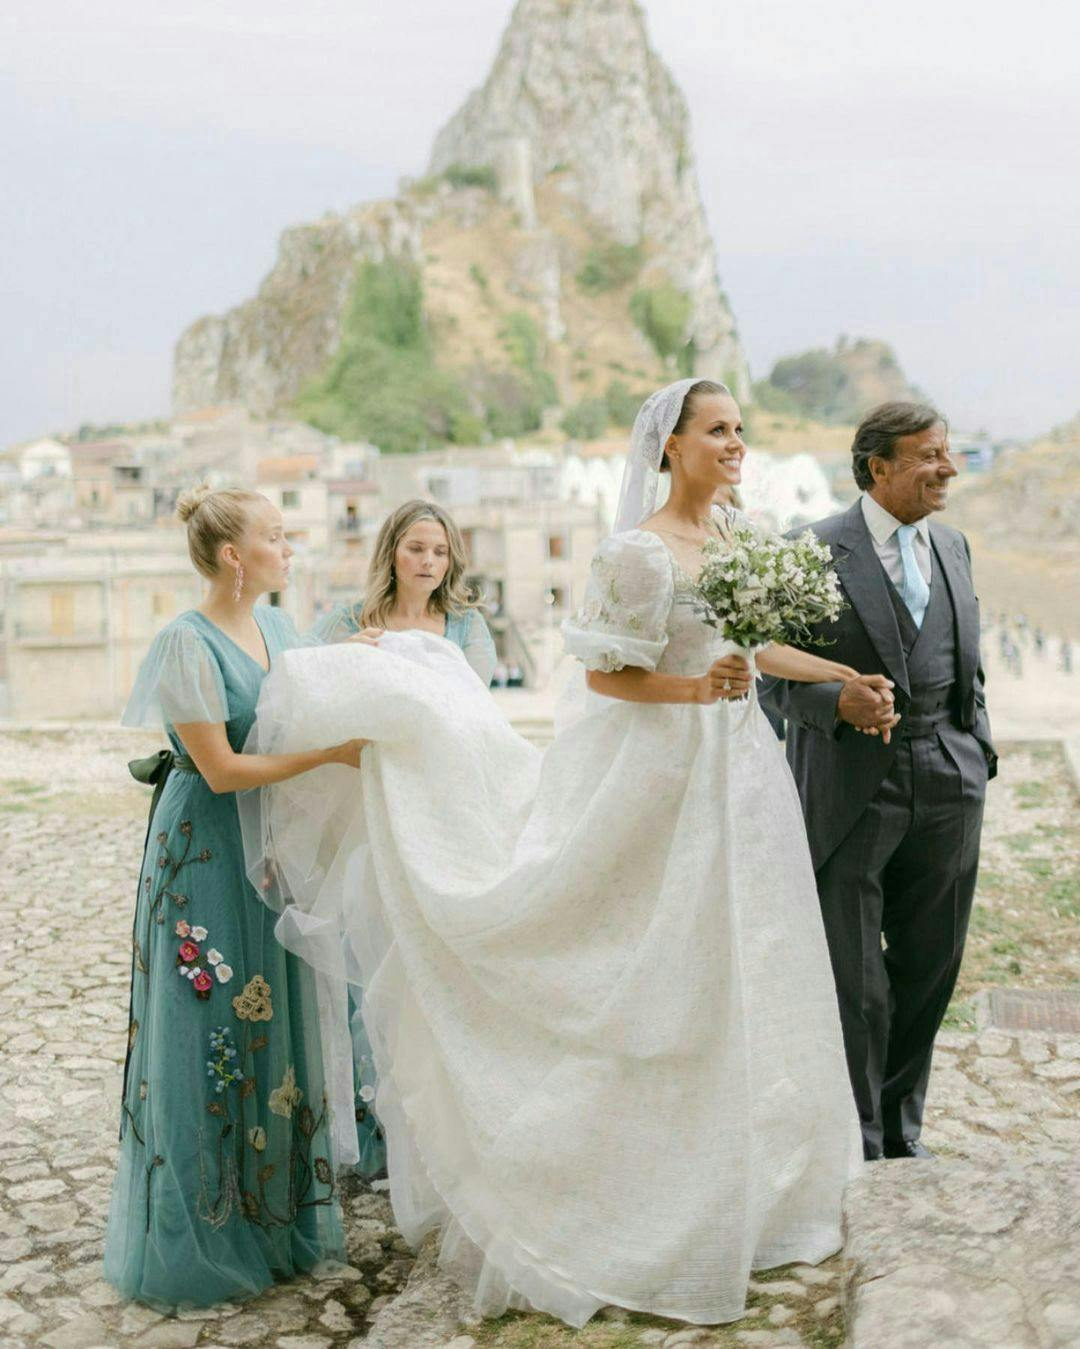 Irene Forte e Felix Winckler se casam na Sicilía